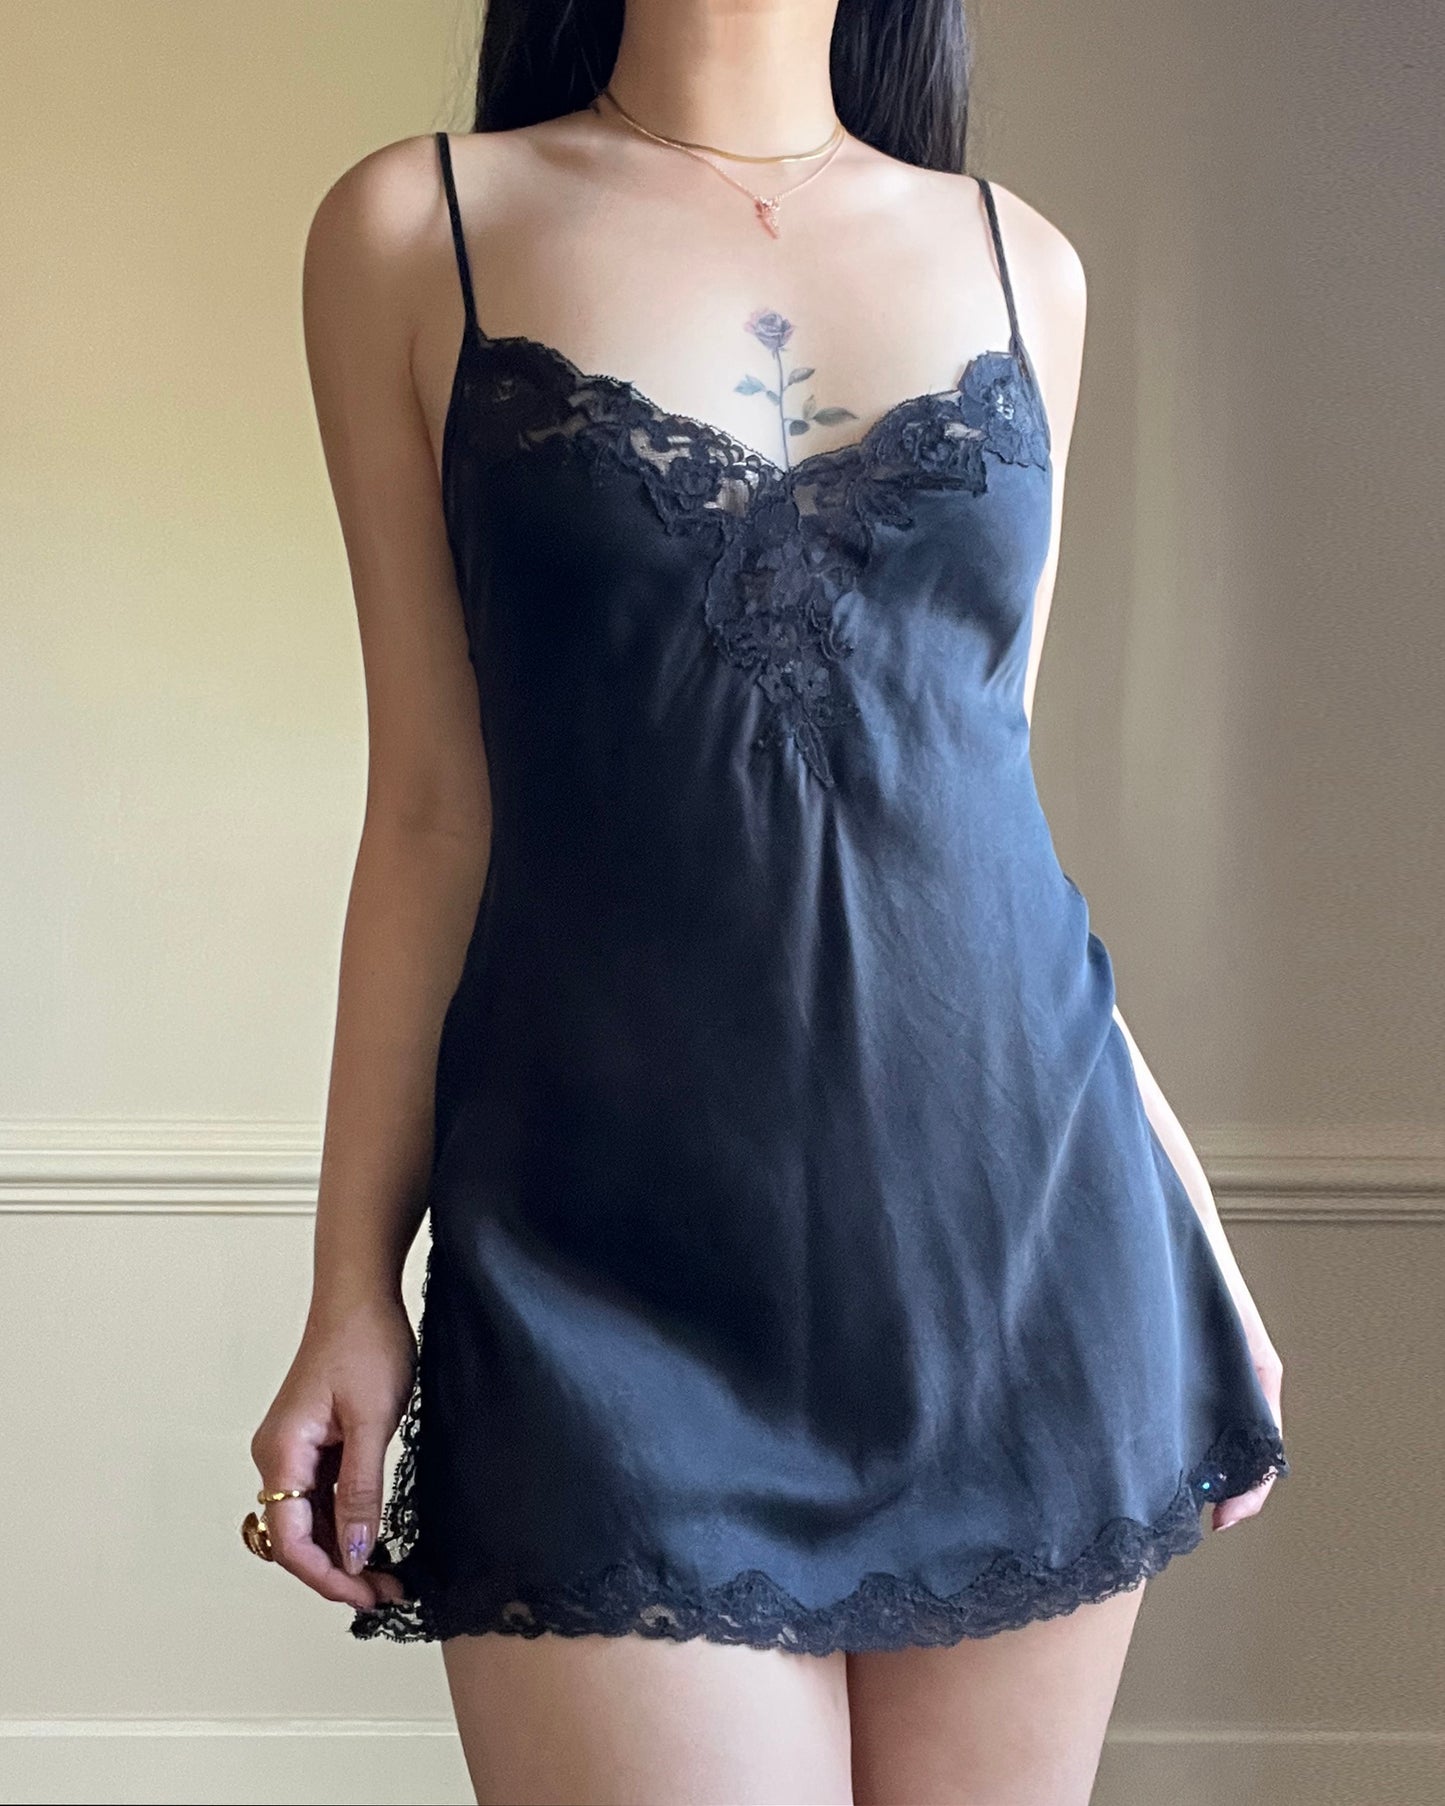 Victoria’s Secret Sultry Slack Satin Slip Dress featuring Floral Lace Trimmings